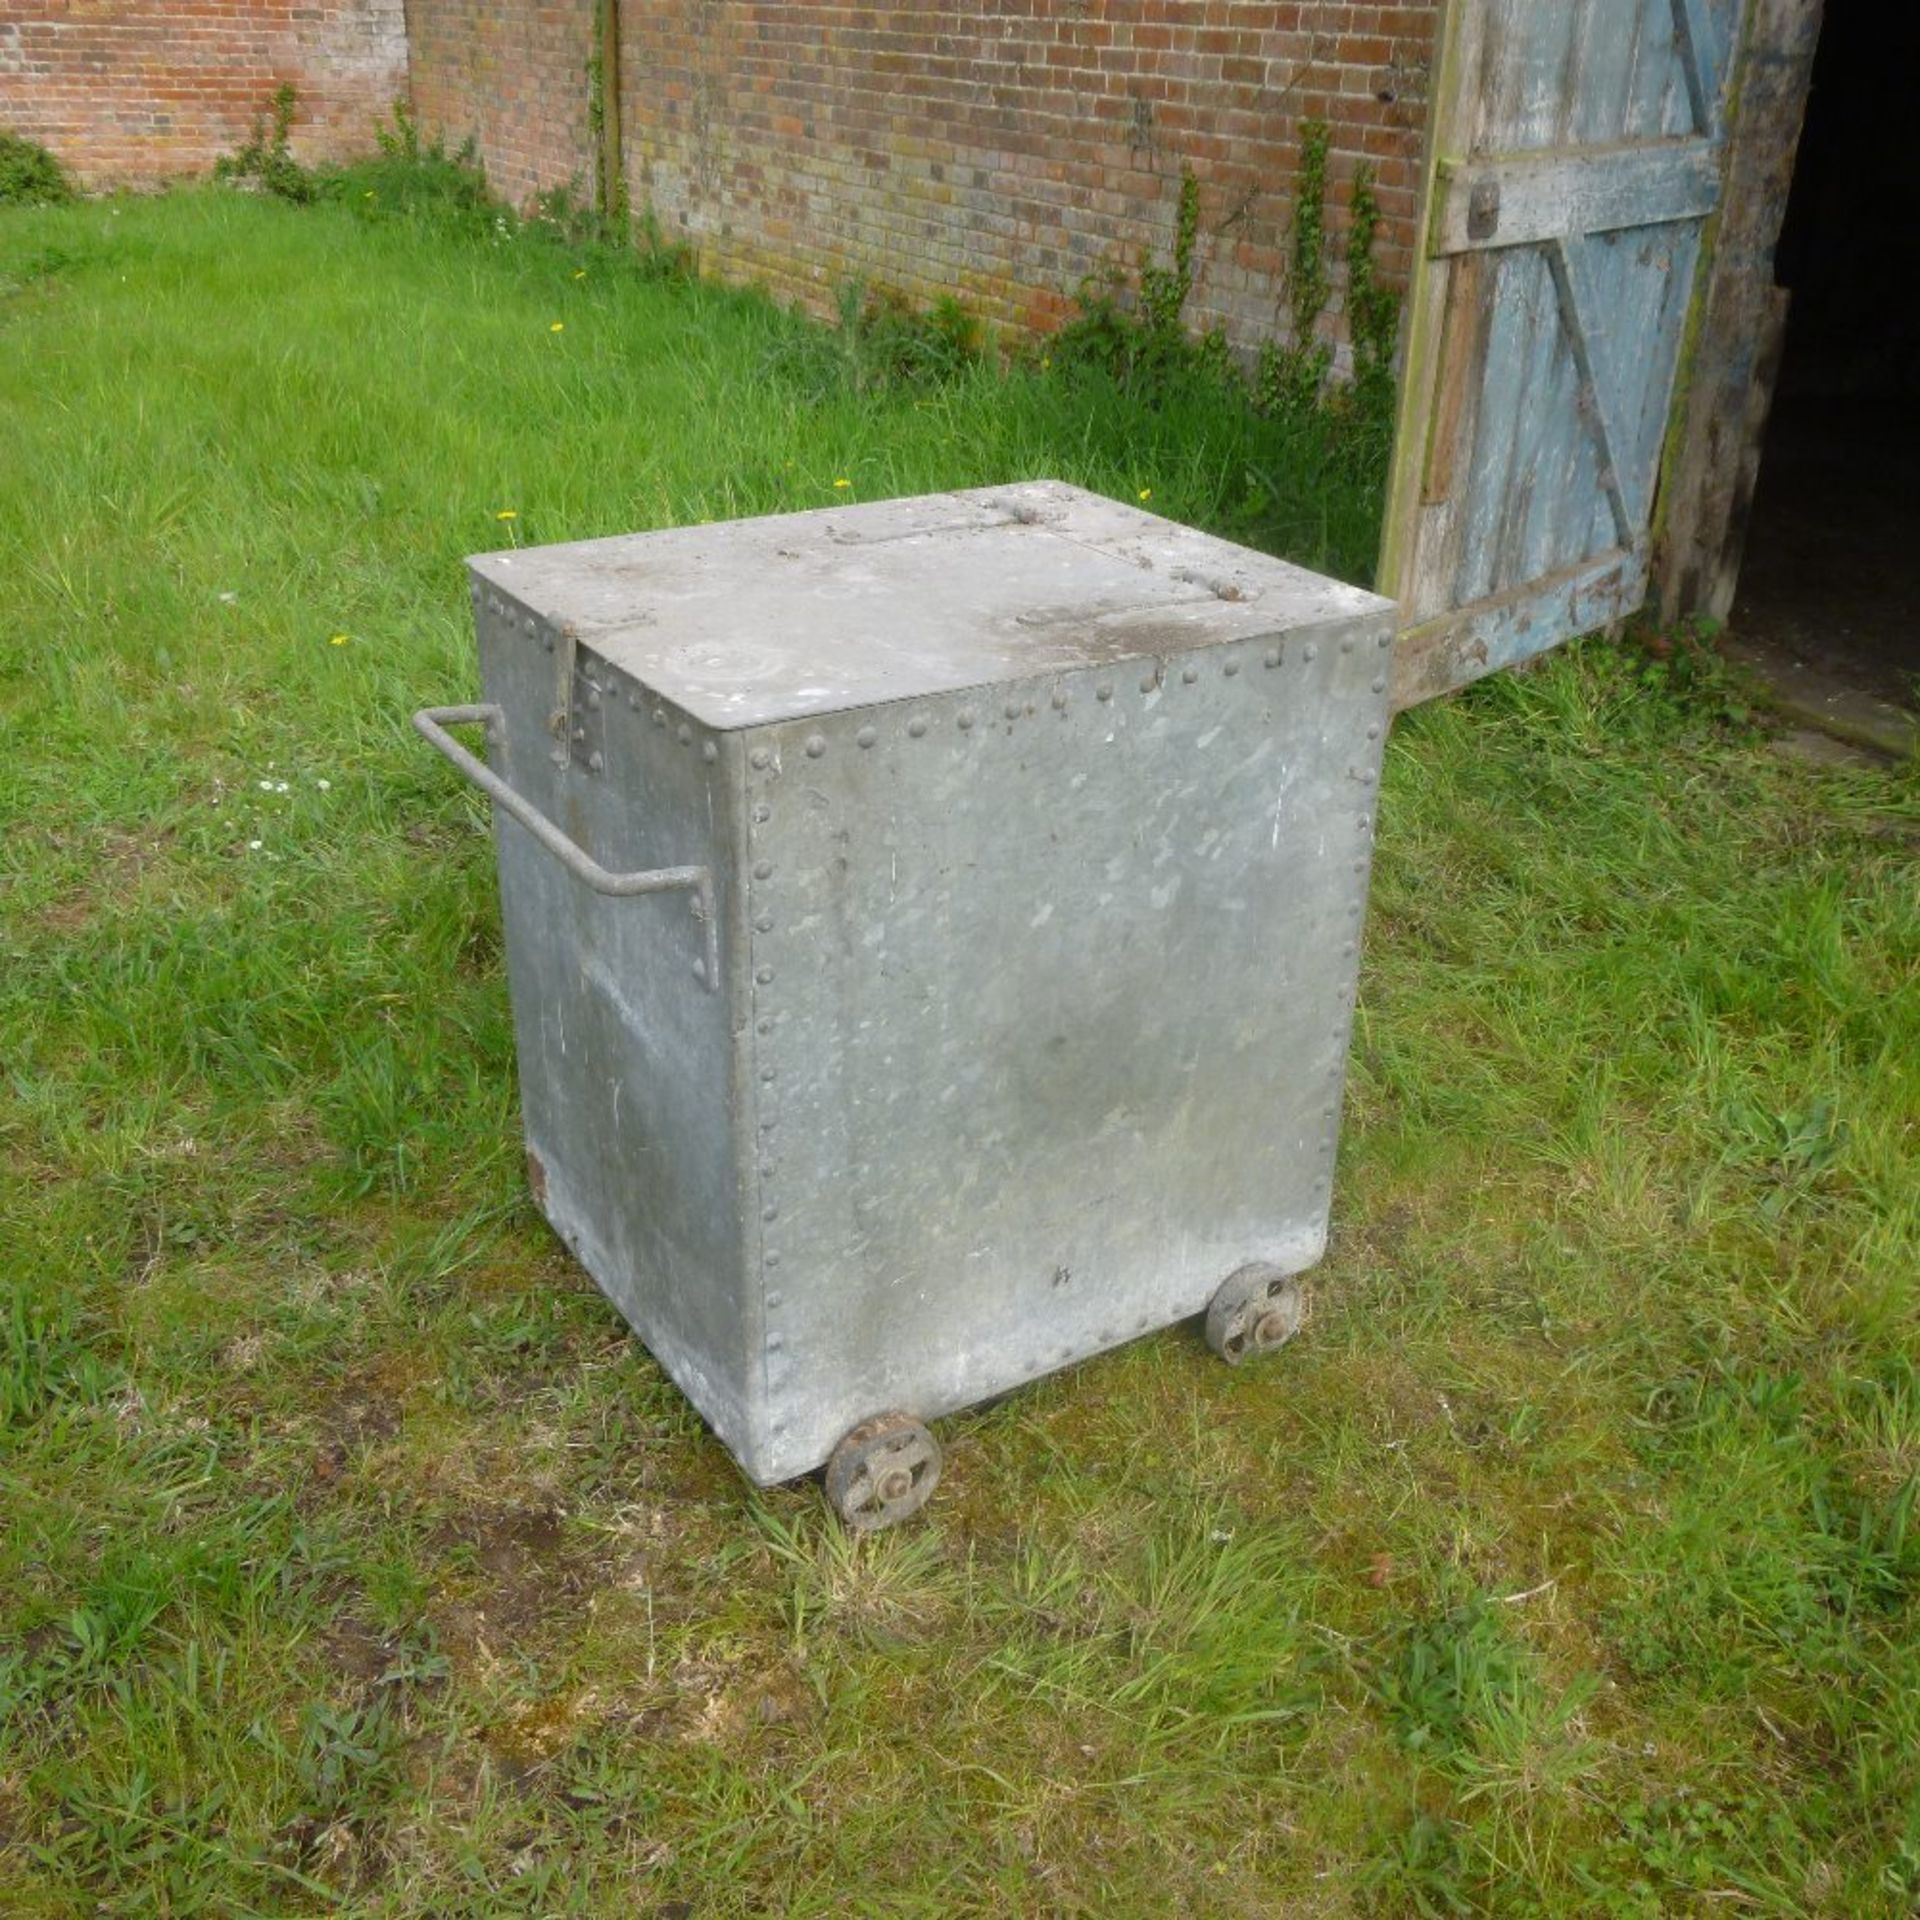 Galvanised feed bin on iron wheels, width 63cm, depth 77cm, height 82cm, in good condition.